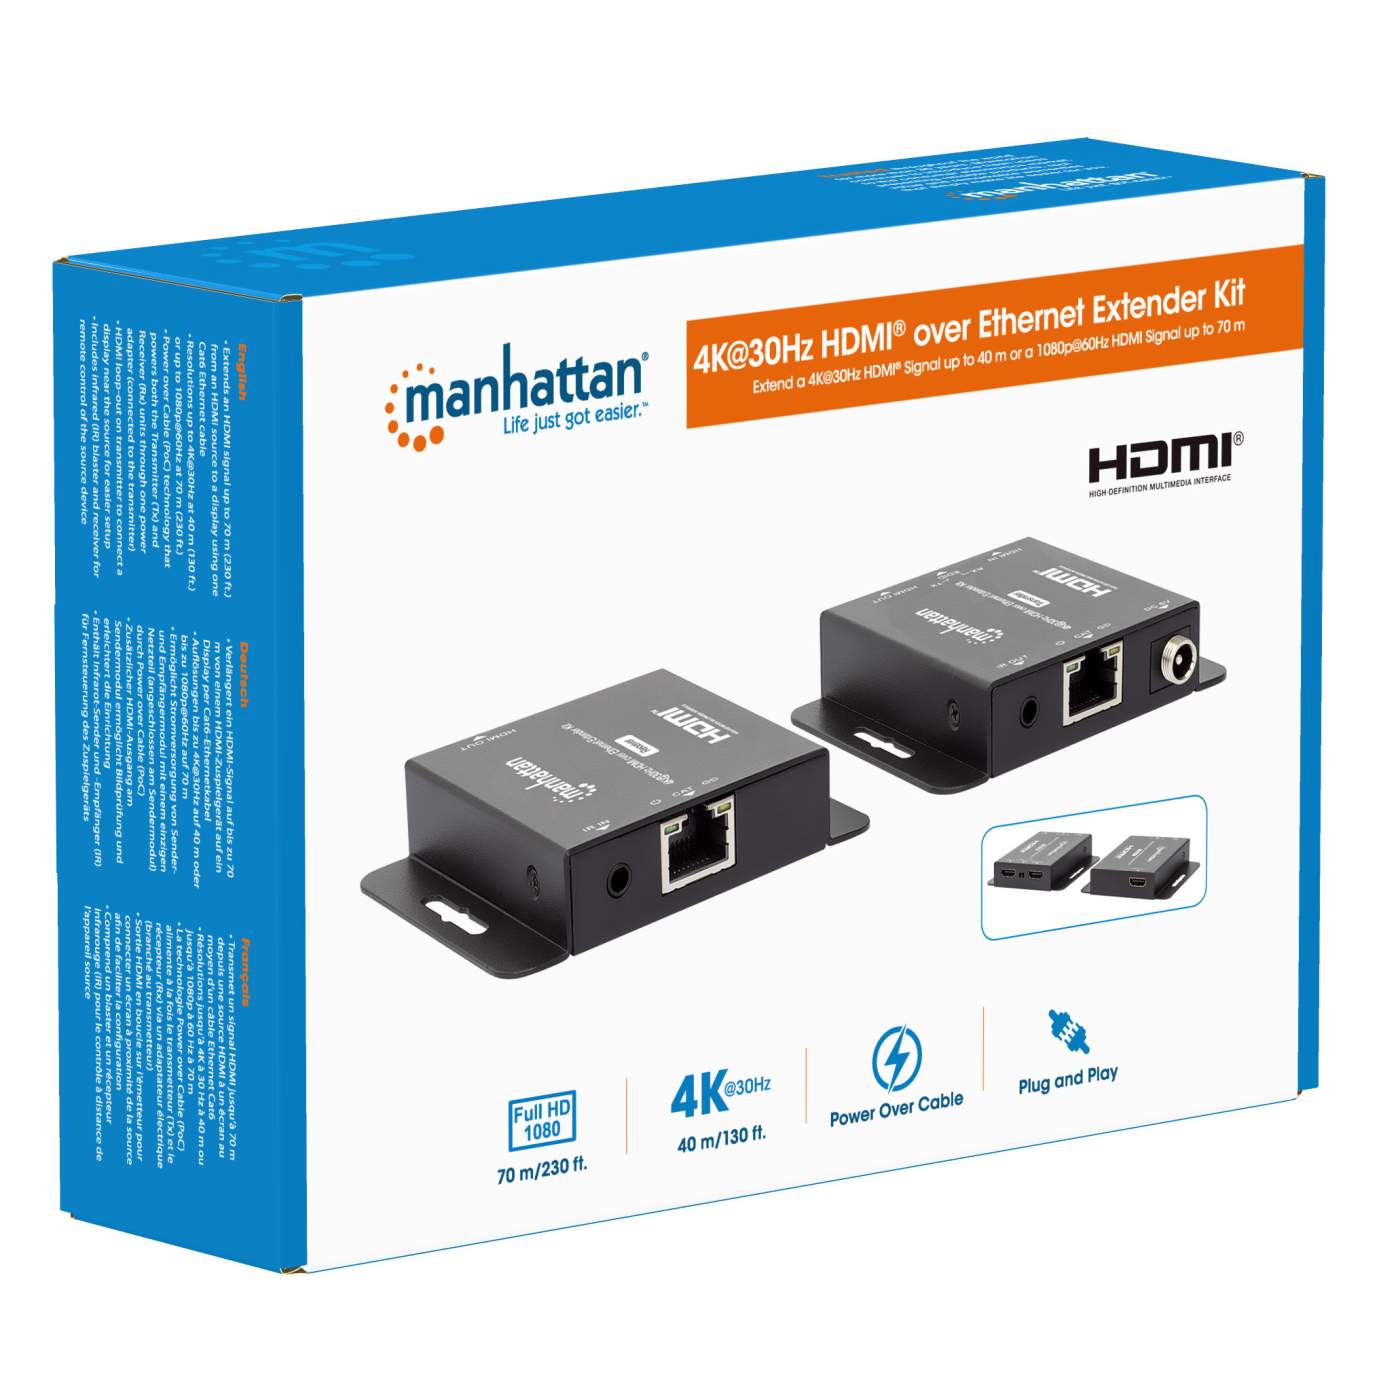 KIT EXTENSOR COMPACTO HDMI A TRAVES DE ETHERNET MANHATTAN ICI207539 – PVL  Tienda Virtual